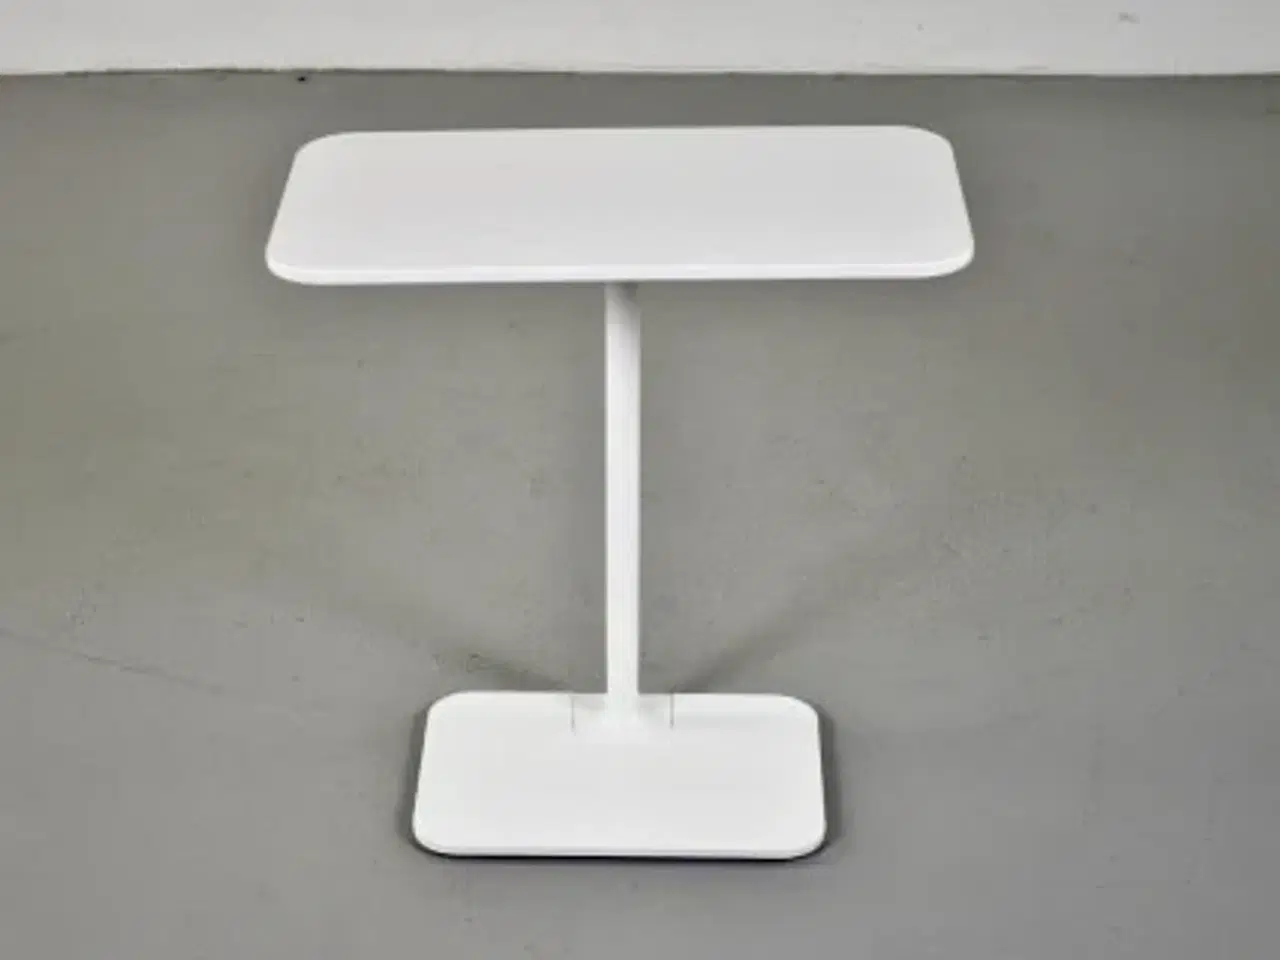 Billede 1 - Steelcase coalesse lagunitas personal table i hvid